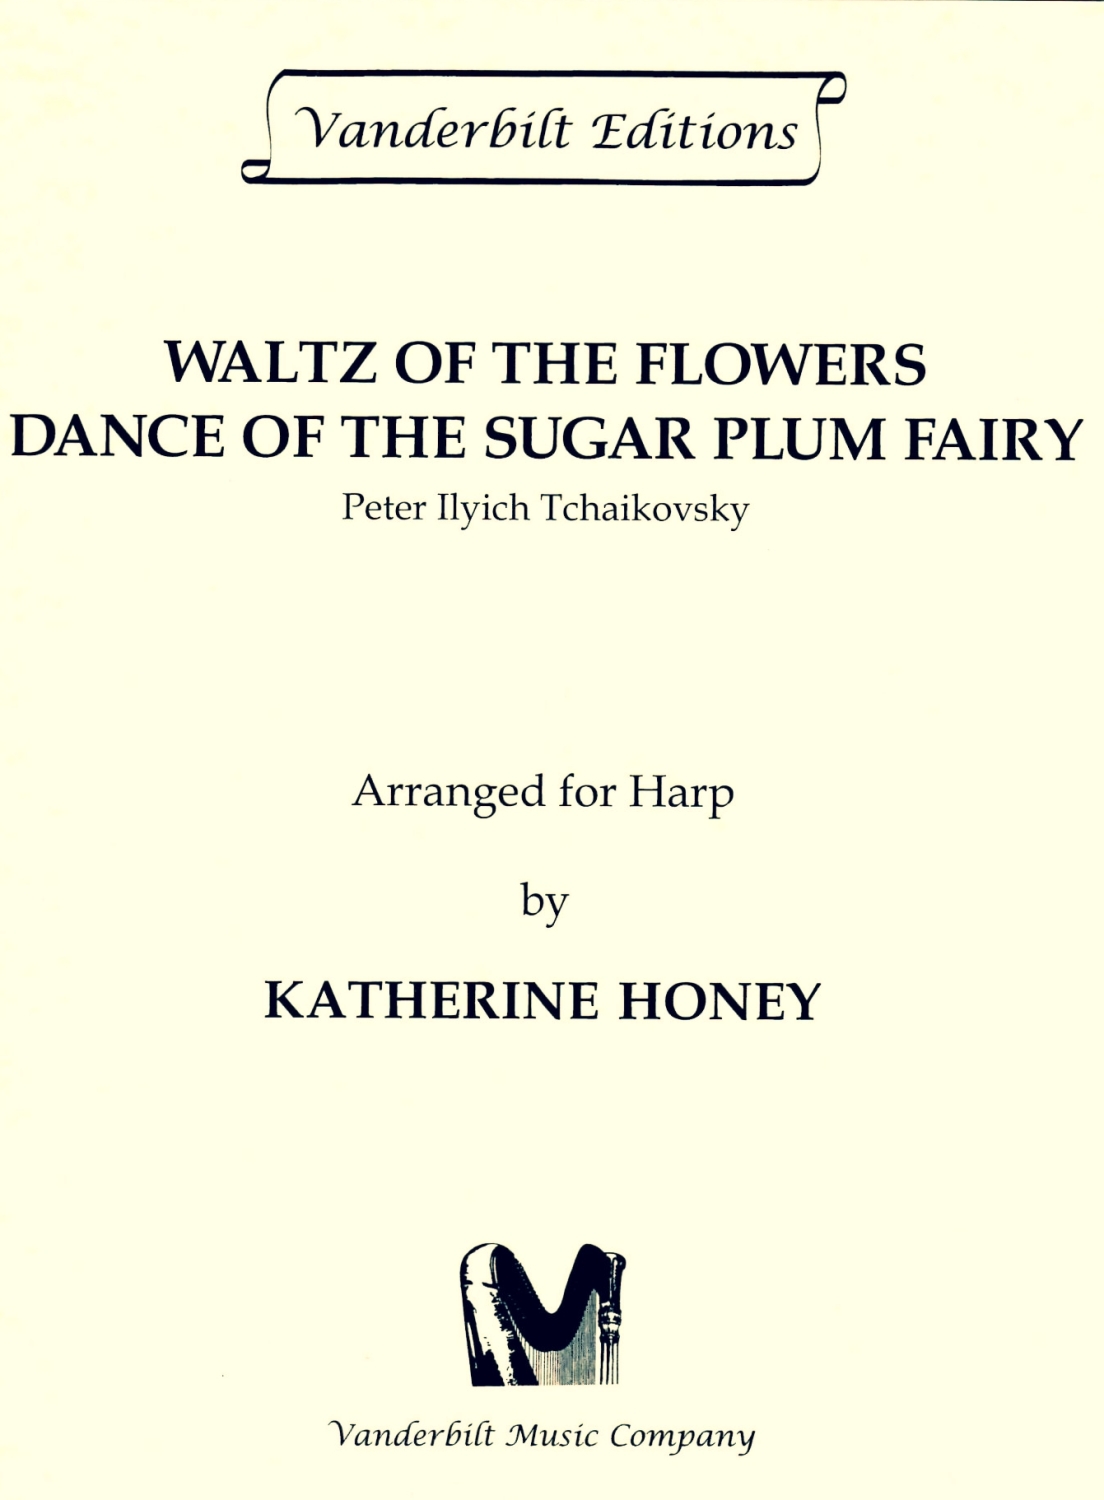 Waltz of the Flowers - Dance of the Sugar Plum Fairy - Tchaikovsky